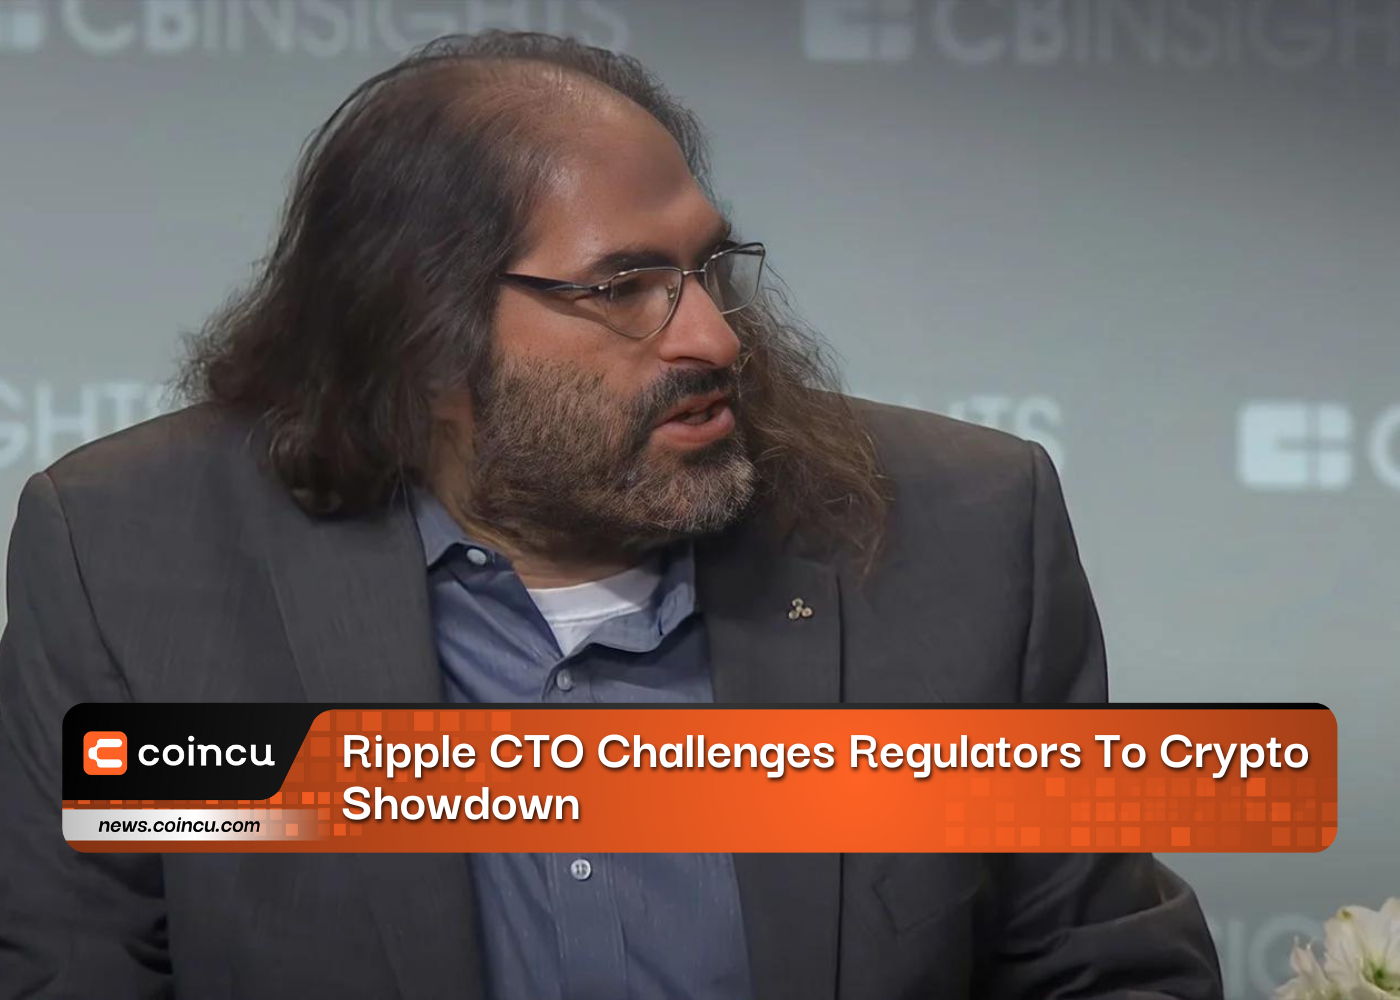 Ripple CTO Challenges Regulators To Crypto